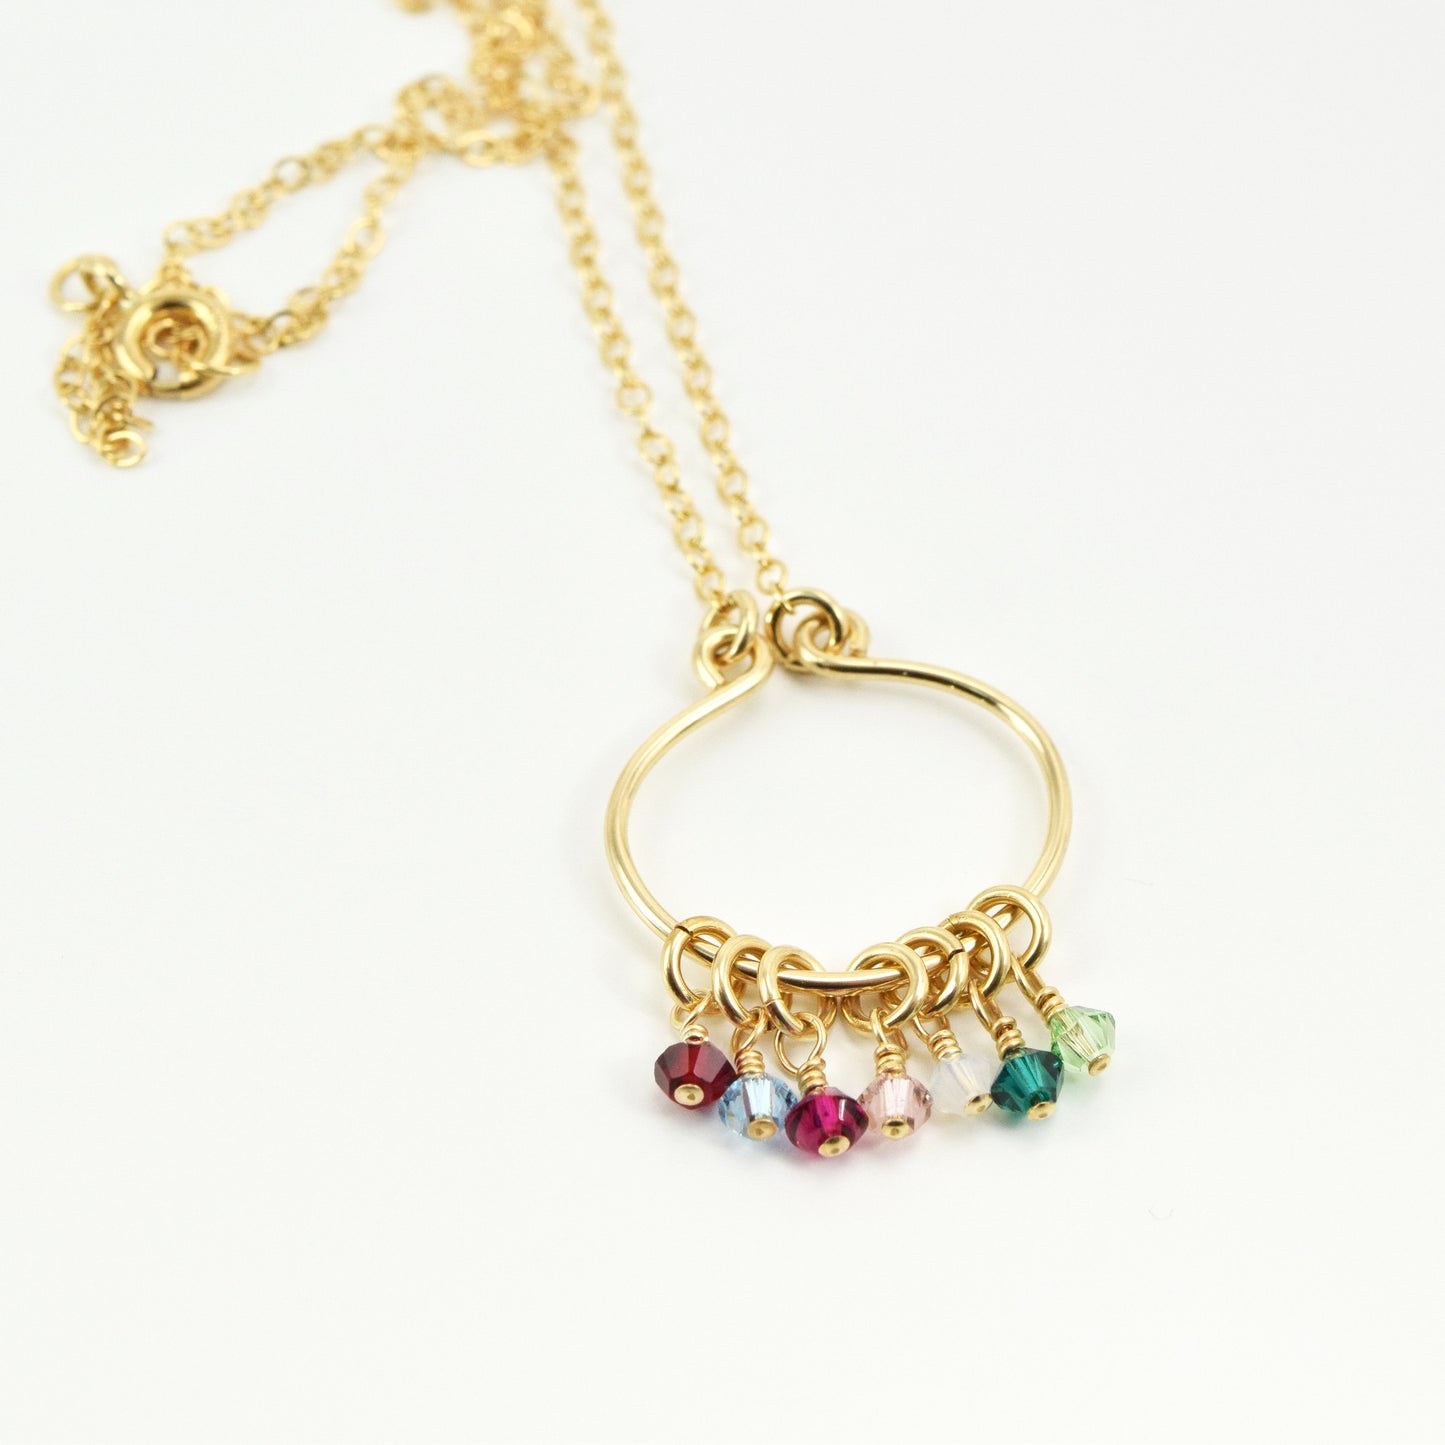 Lyre Gold Birthstone Necklace, Large - Cloverleaf Jewelry